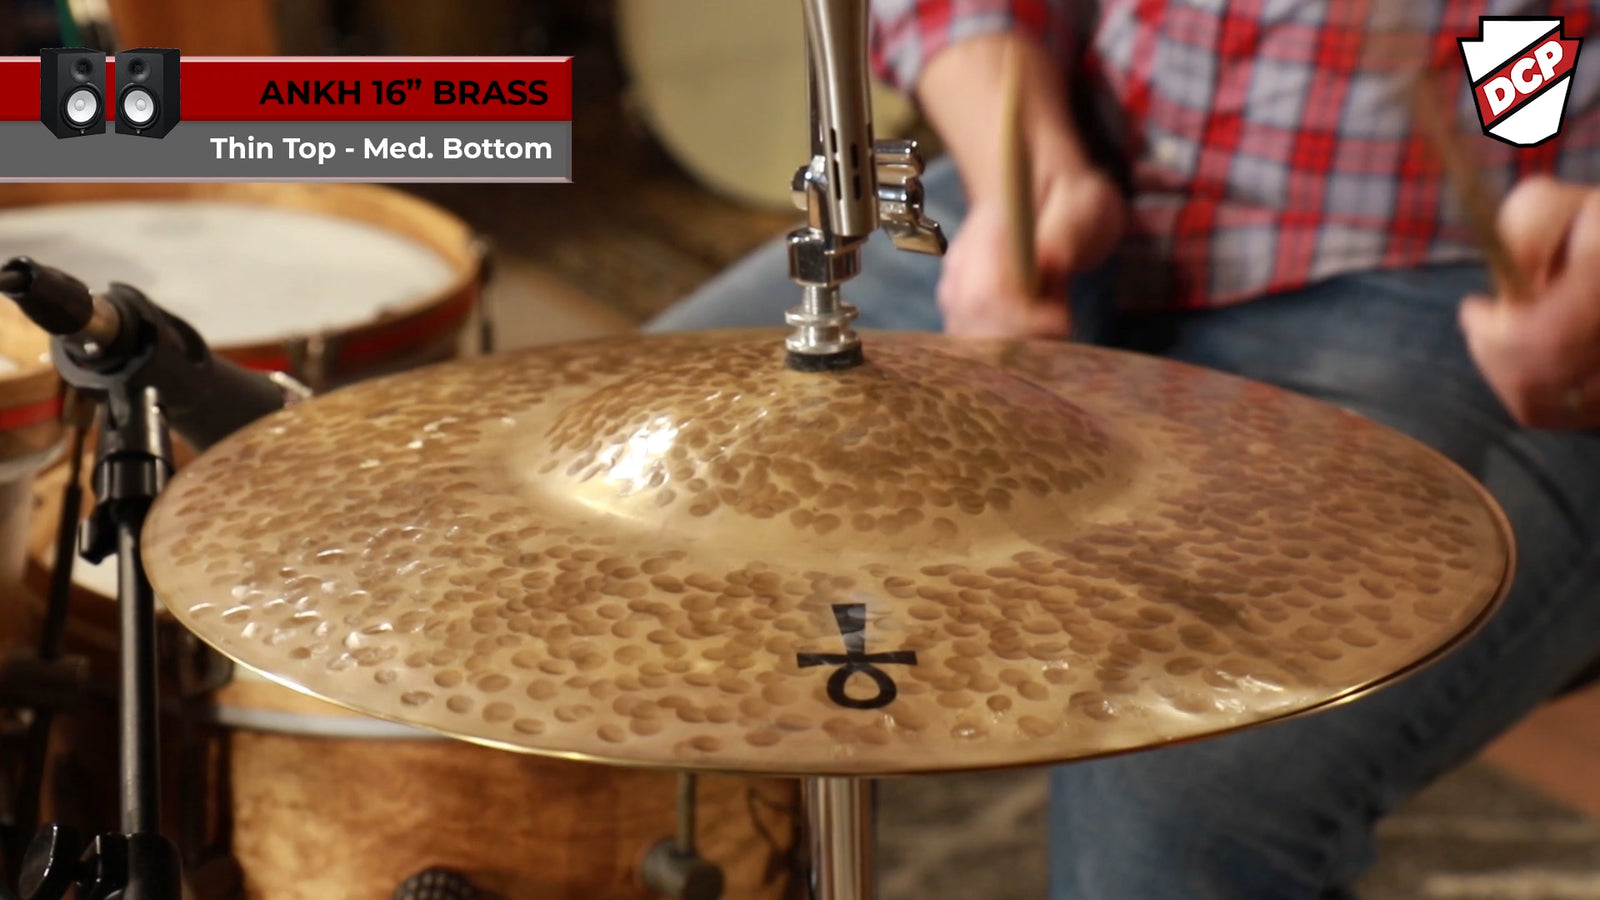 Sabian / A&F Ankh Hi-Hat Cymbals Review